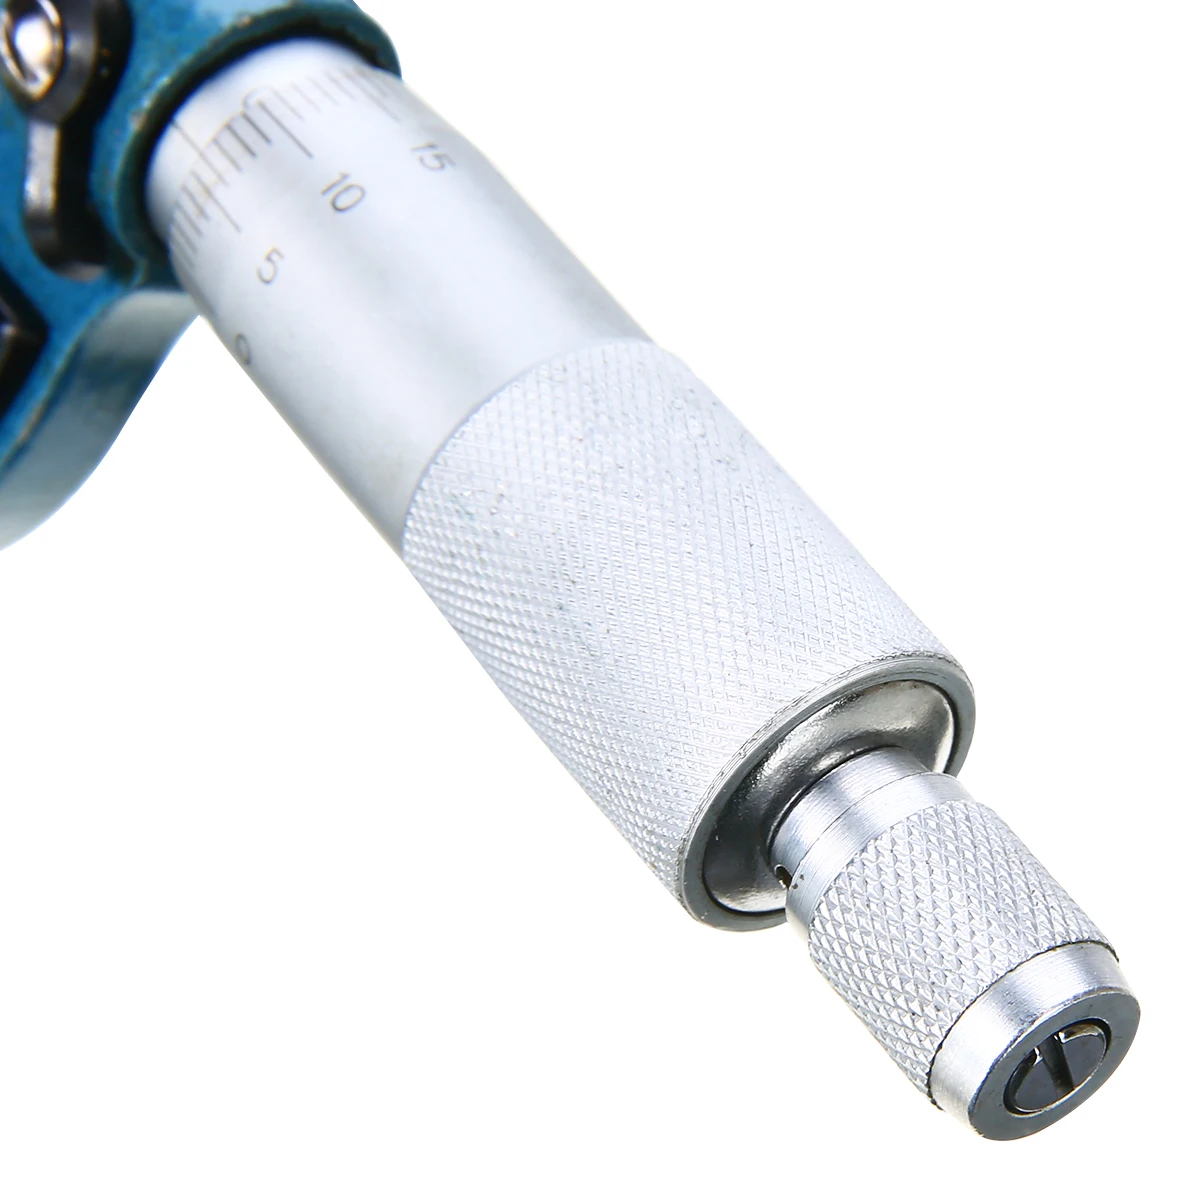 1pc Precise Gauge Micrometer 0-25mm 0.01mm Outside Metric Micrometer Tool With Metal Caliper Tool For Measuring Tools